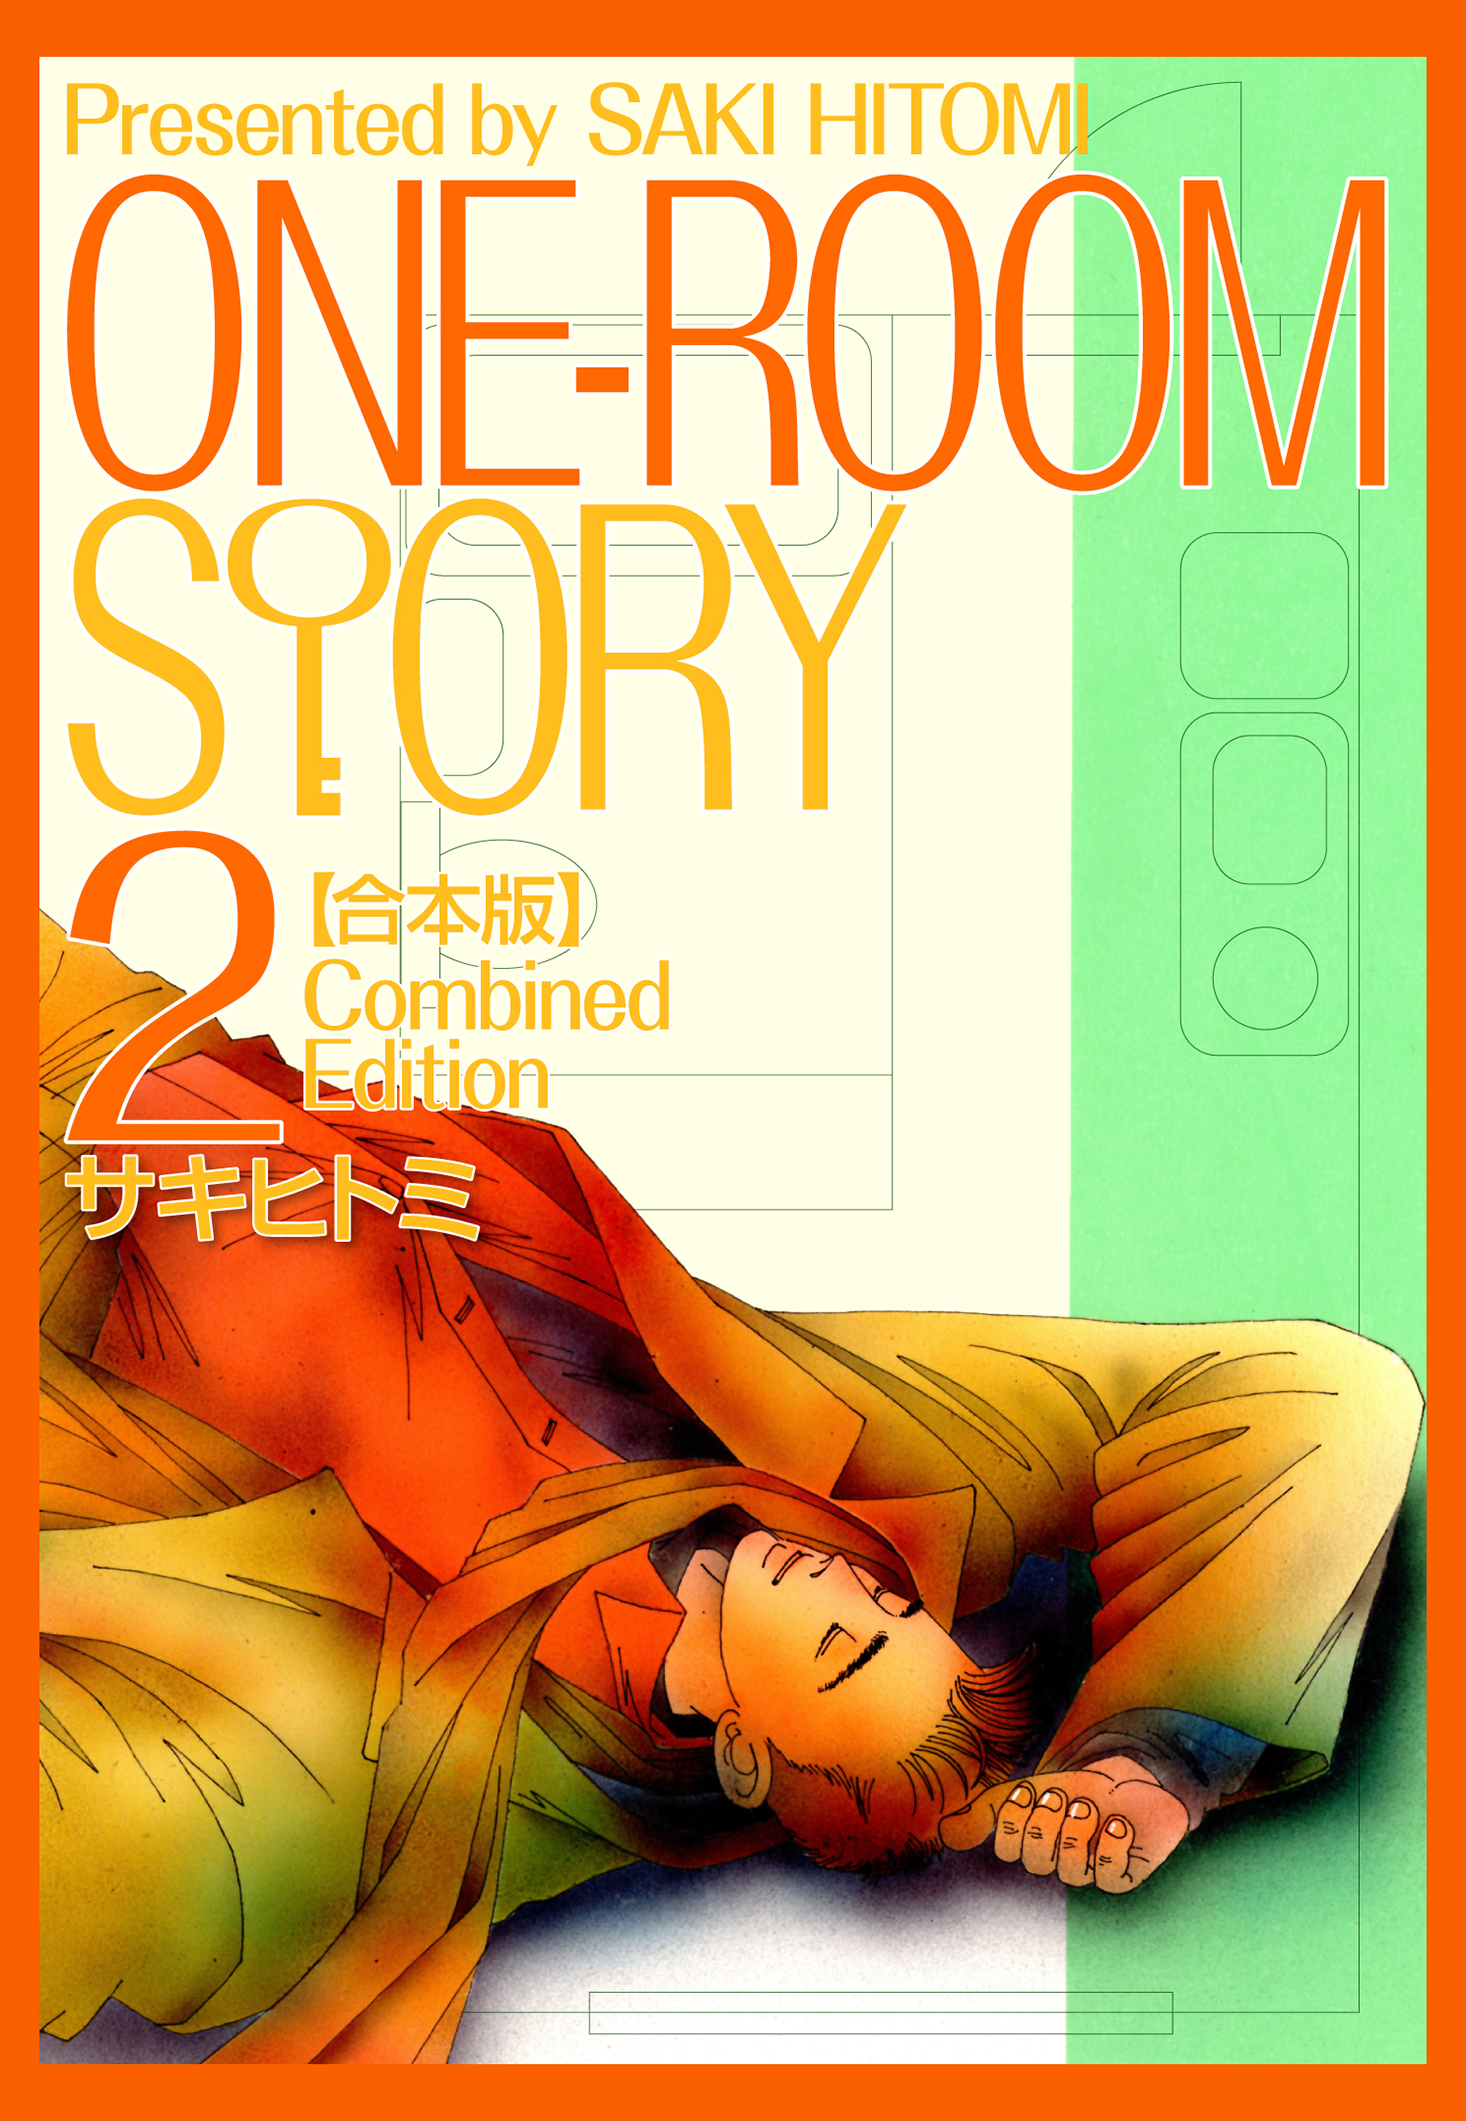 ONEROOM STORY【合本版】(2) - サキヒトミ - 青年マンガ・無料試し読み ...